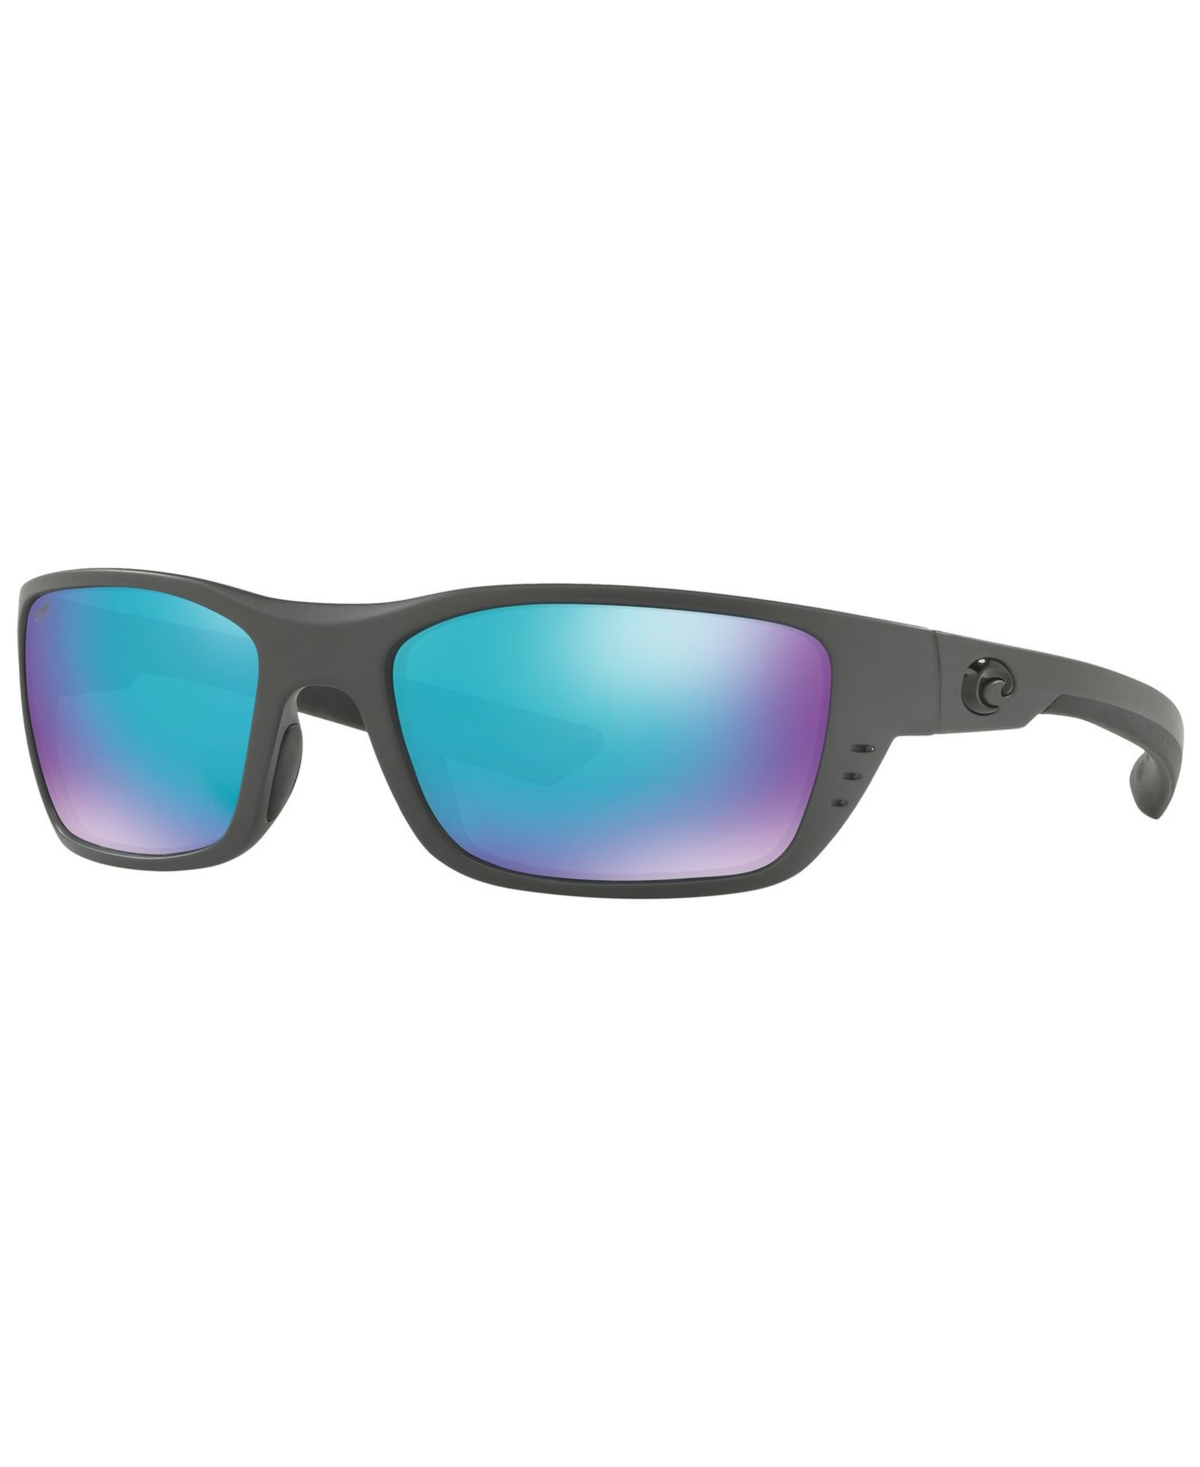 Polarized Sunglasses, Whitetip 58 - GREY MATTE/ BLUE MIRROR POLAR